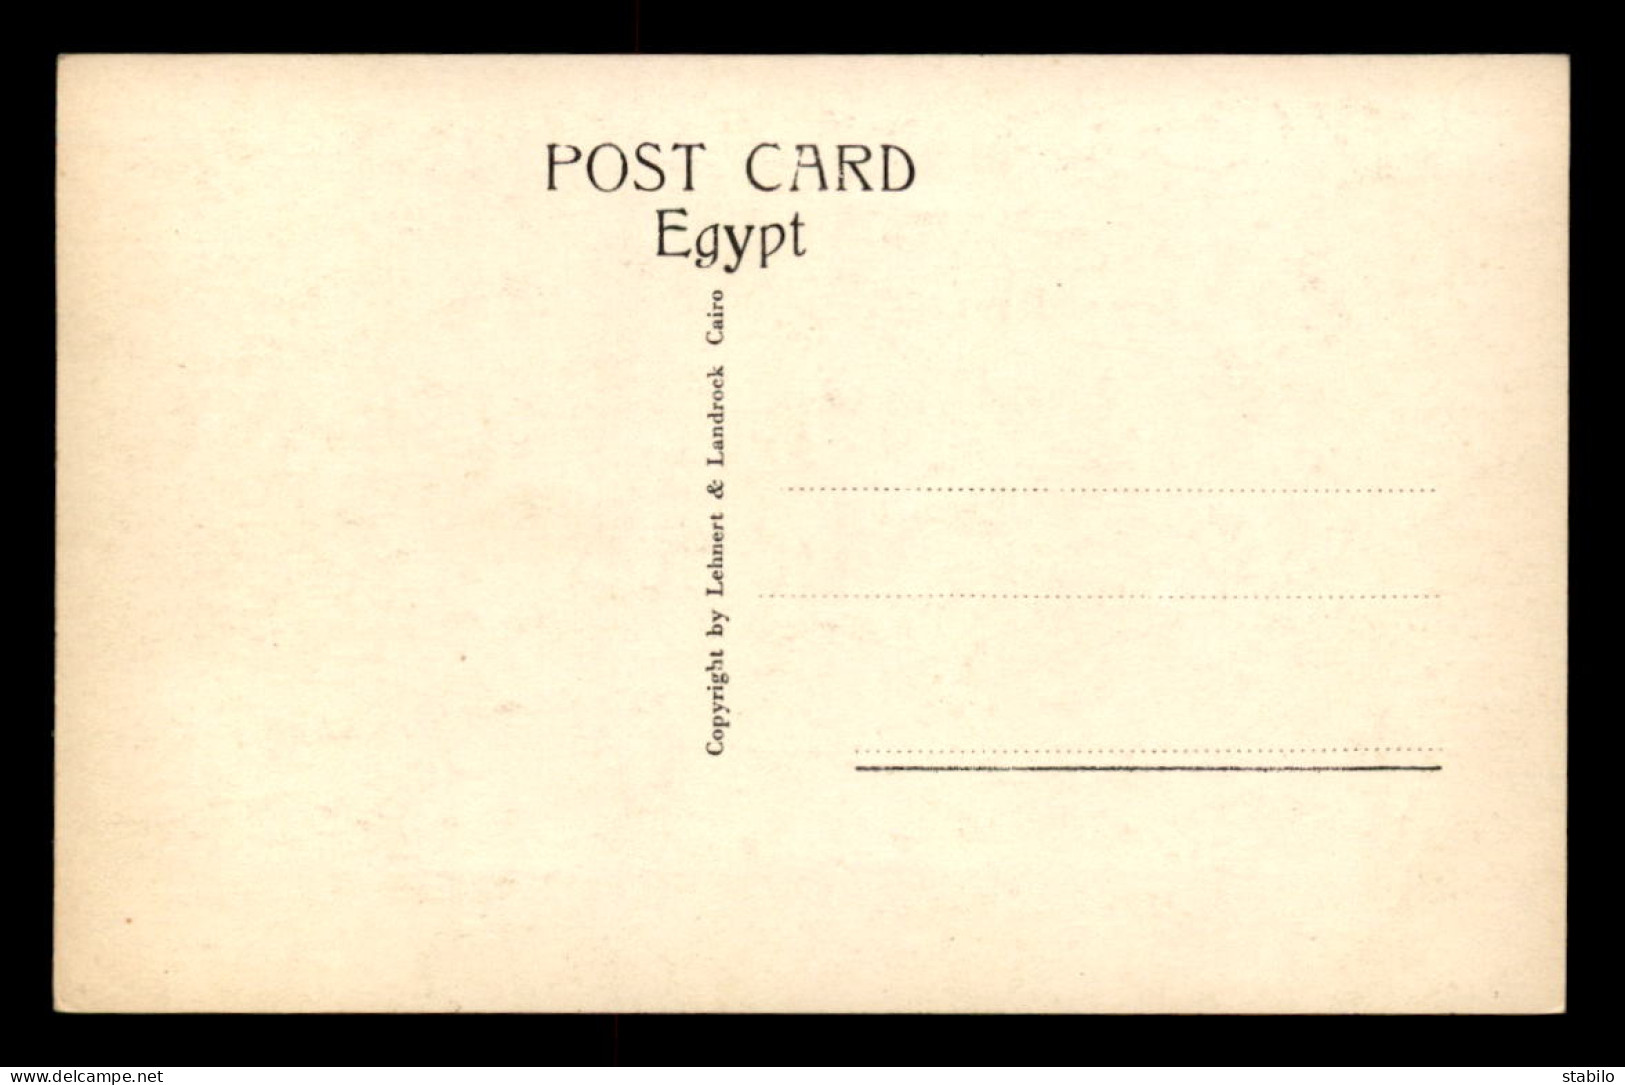 EGYPTE - LENHERT & LANDROCK N°107 - CAIRO - MAMELOUK TOMBS AND CITADEL - Caïro